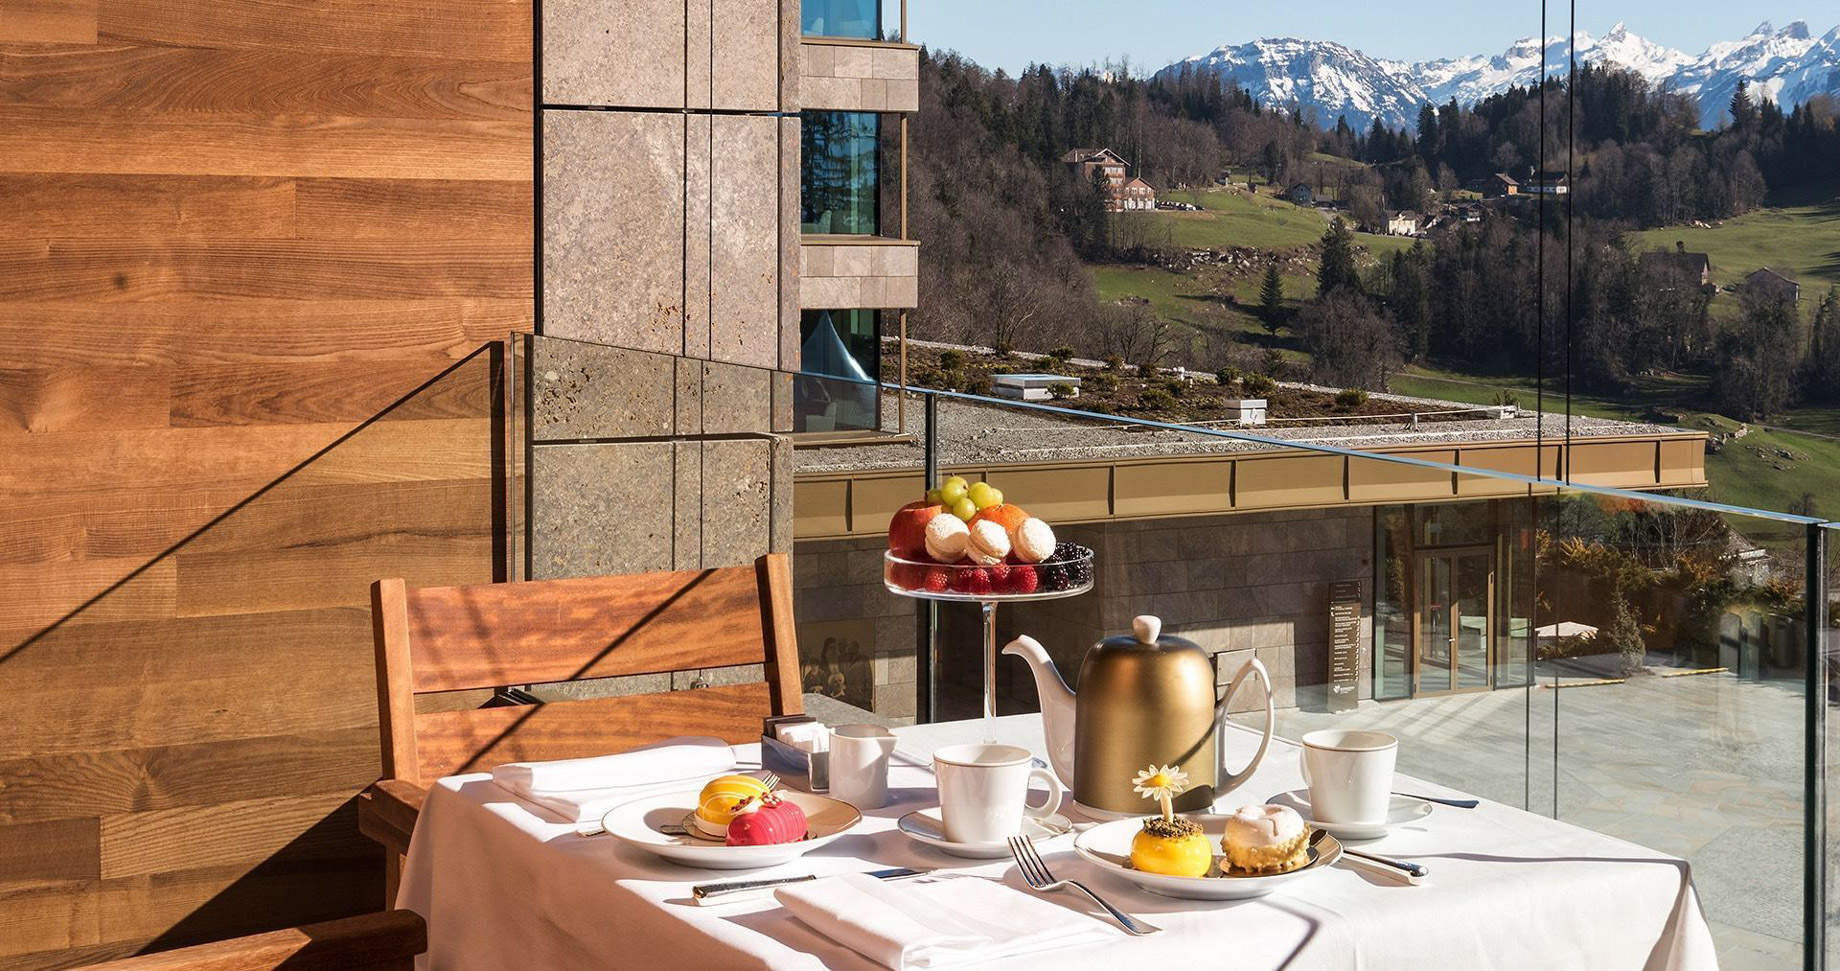 Burgenstock Hotel & Alpine Spa – Obburgen, Switzerland – Panoramic Suite Balcony Dining Table